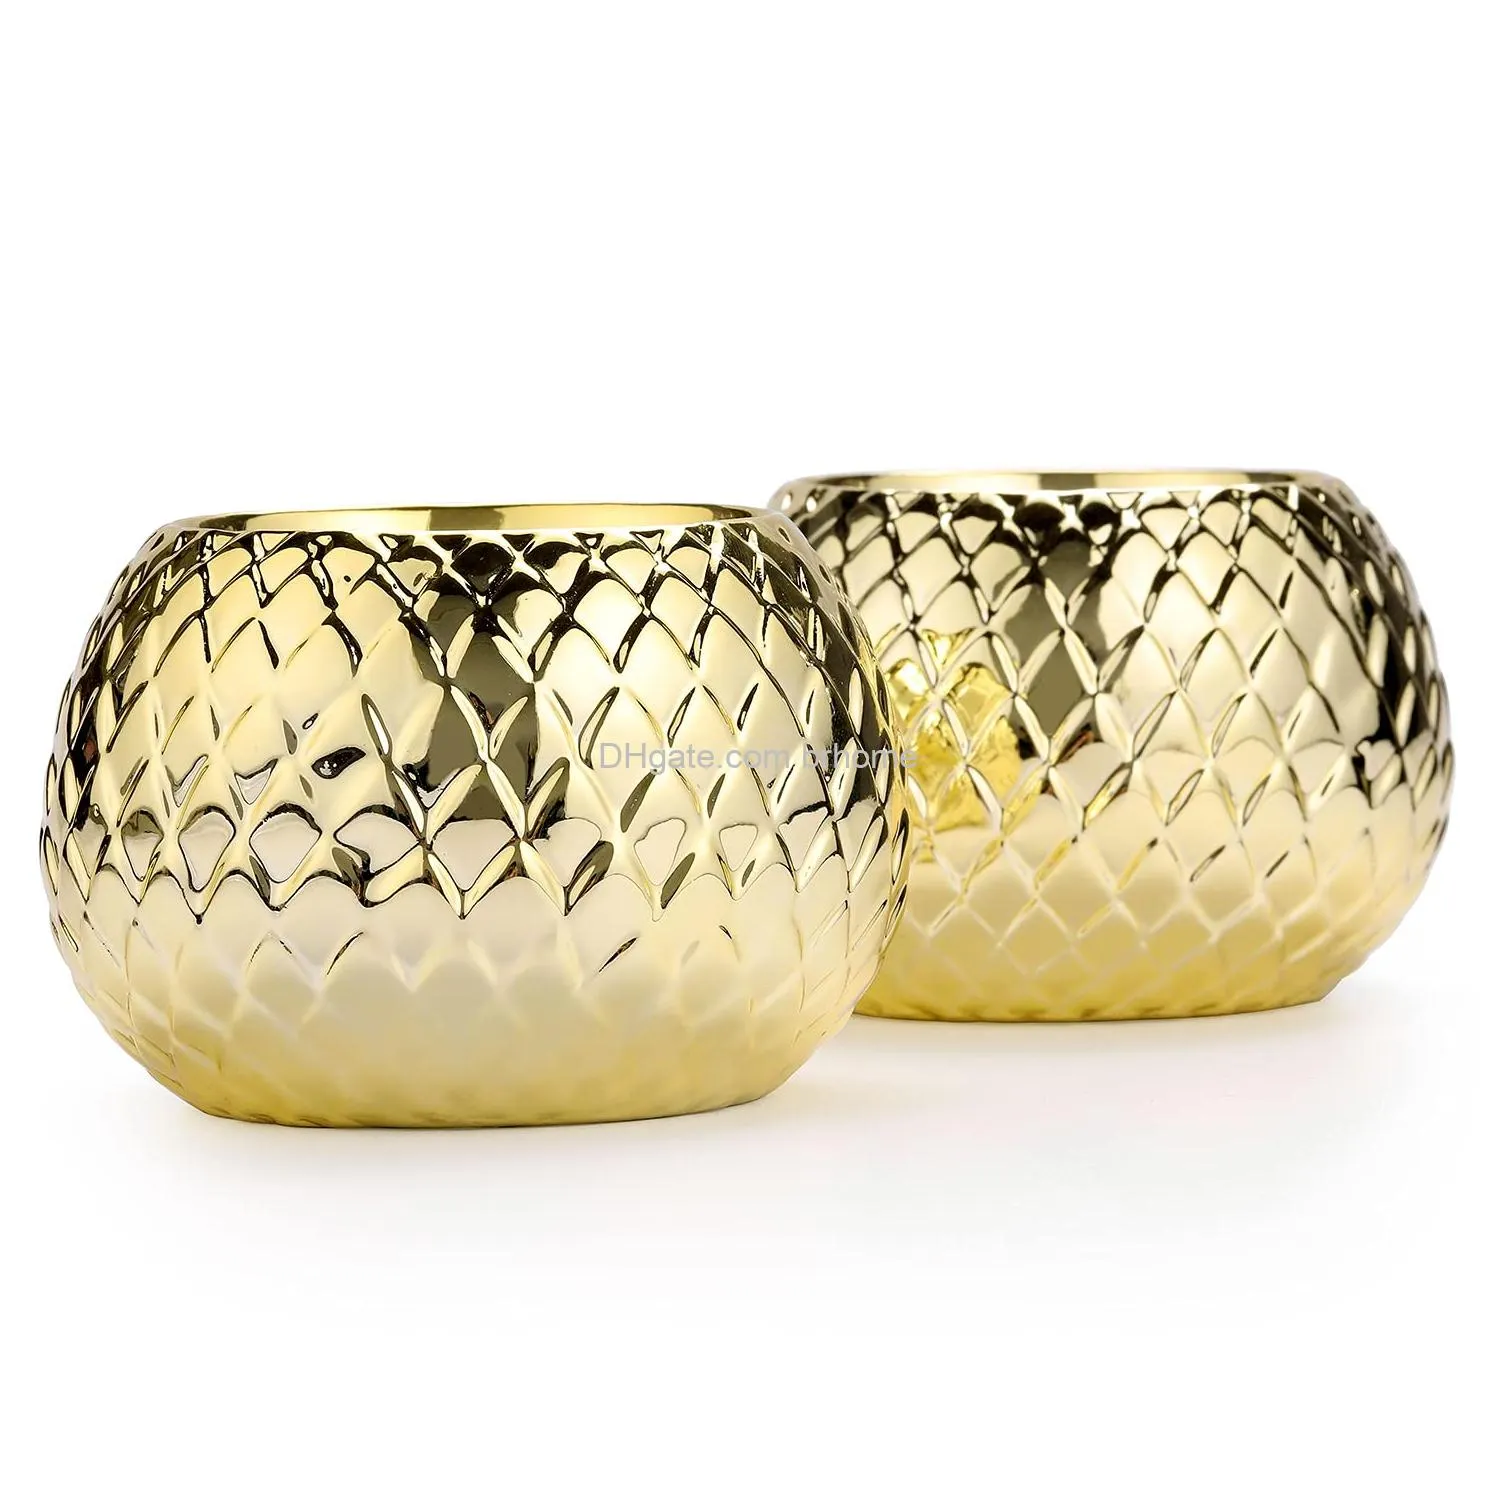 modern ceramic tealight candleholders brass tone diamond patterned round votive candle holders set of 2